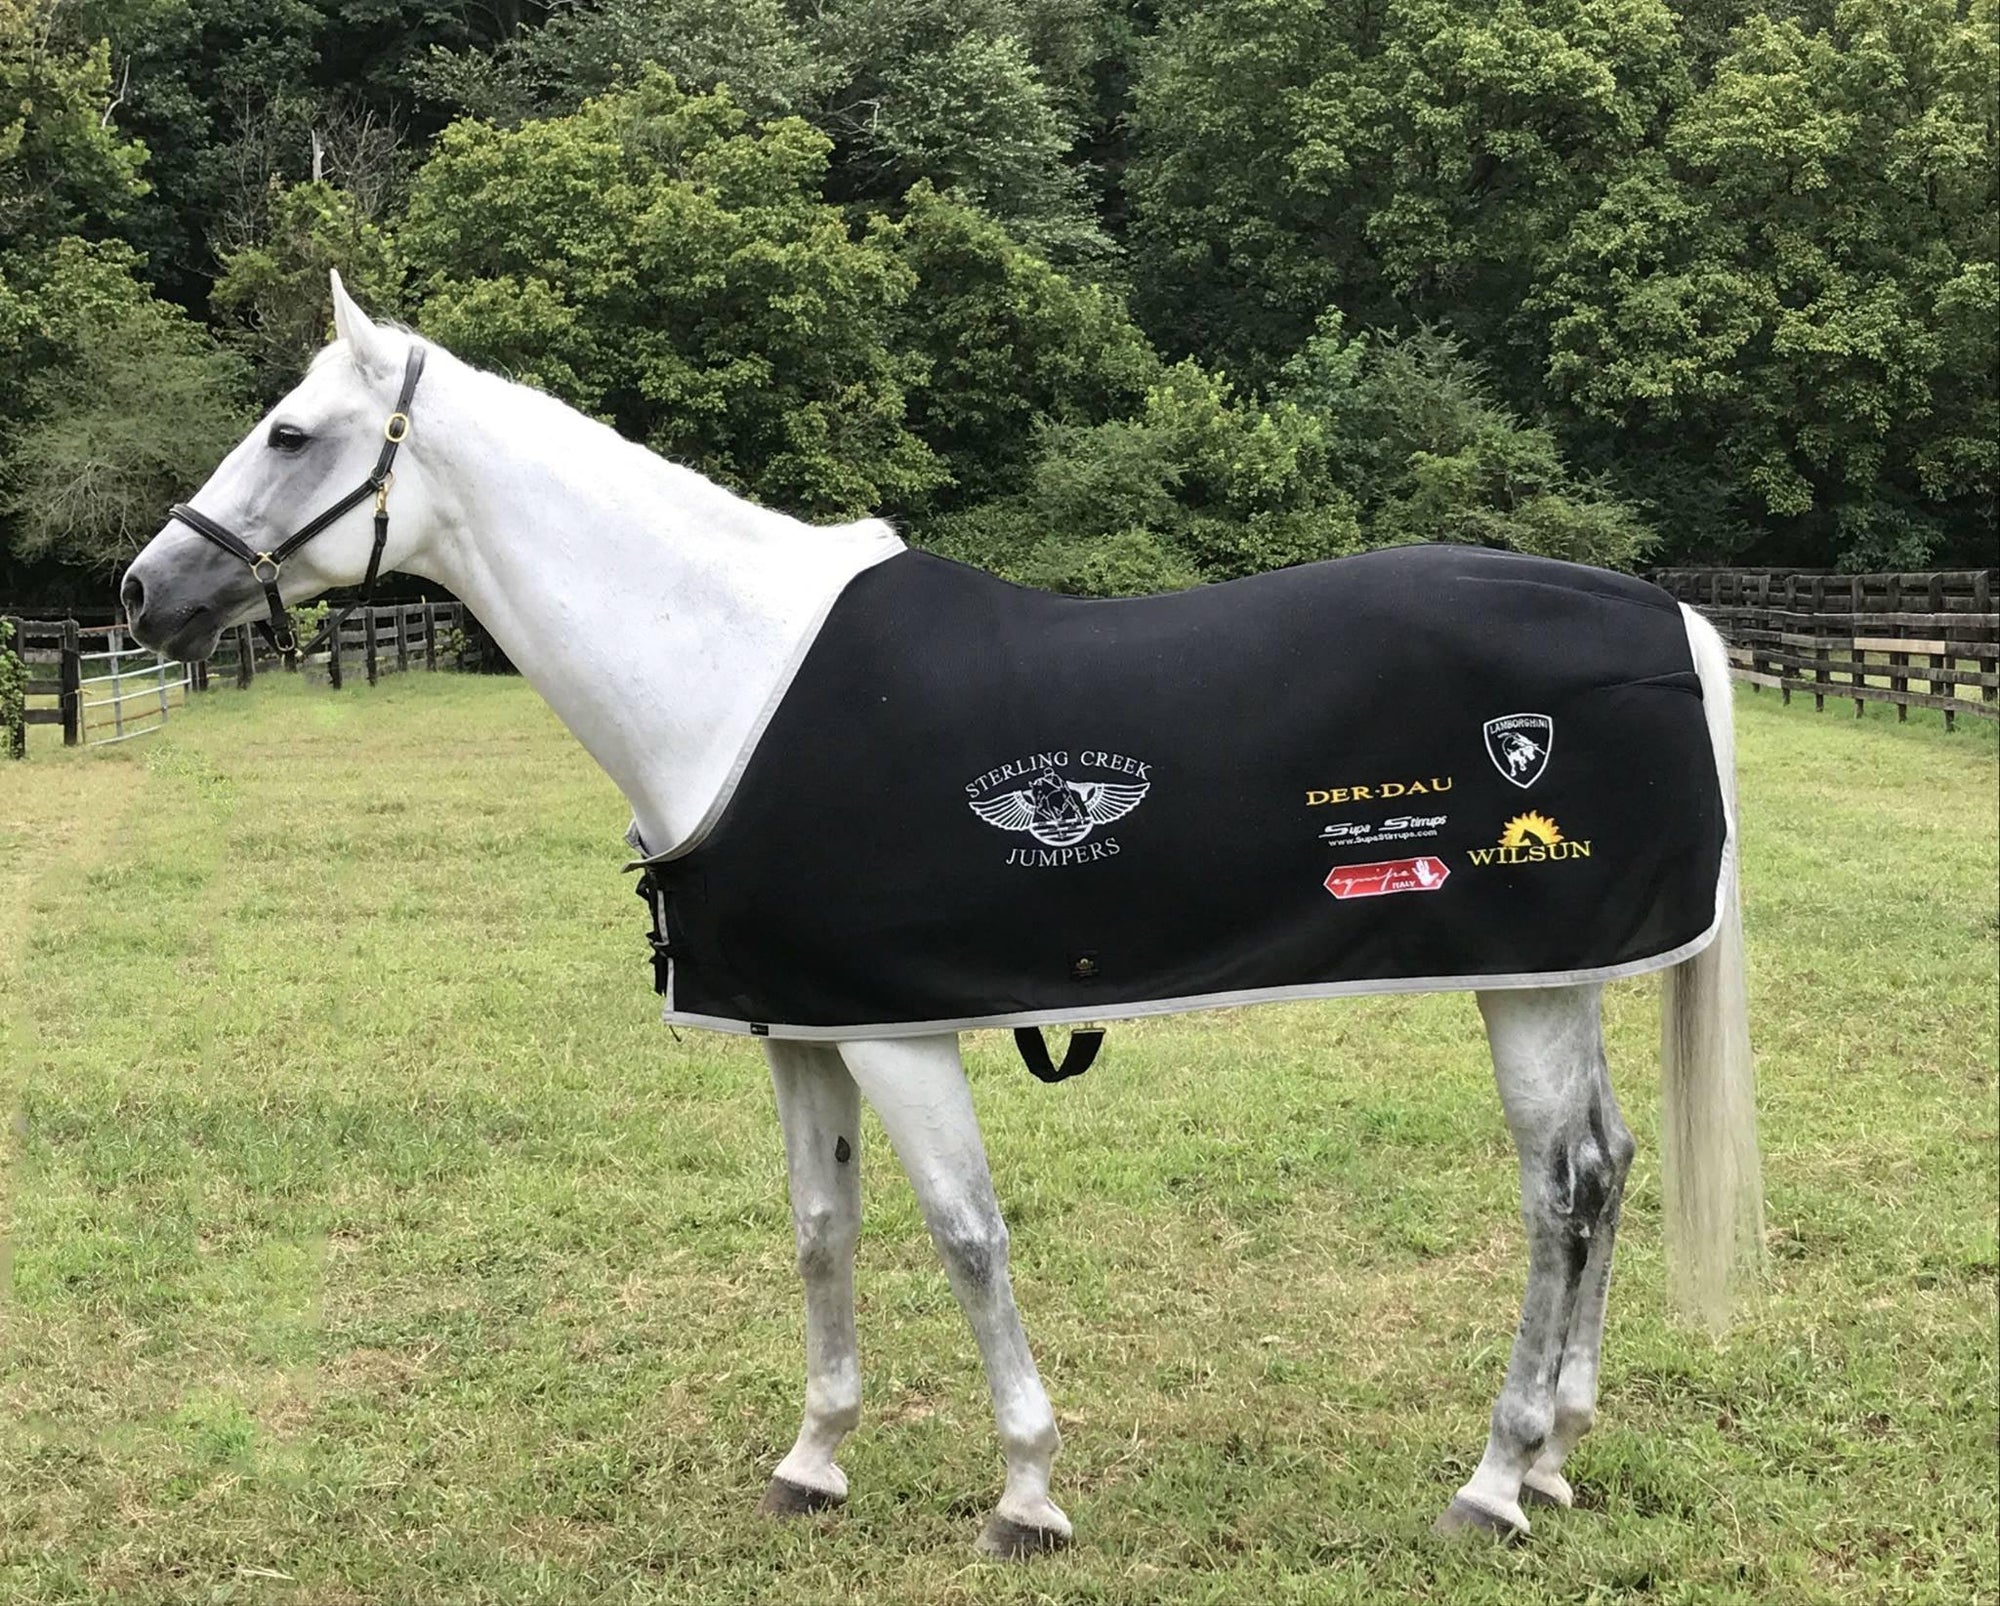 Custom ThermoCool Cooler - Wilsun Custom Horse Blankets & Fine Horse Accessories